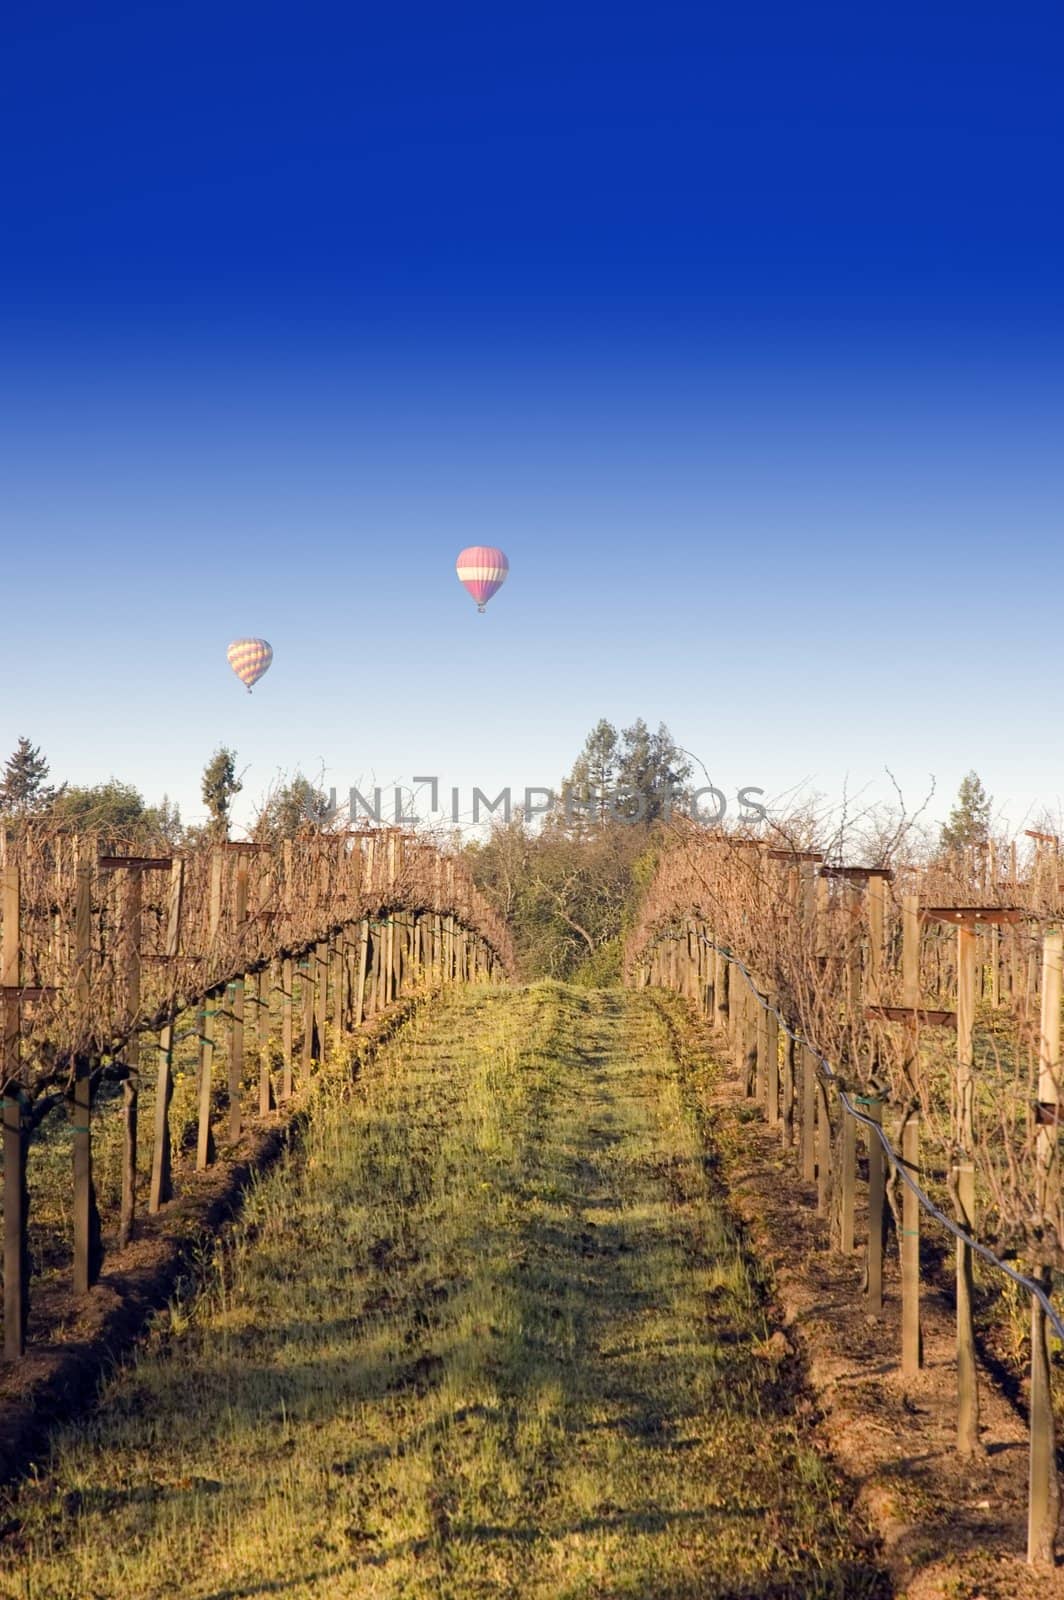 Balloons over Napa vineyard by jeffbanke